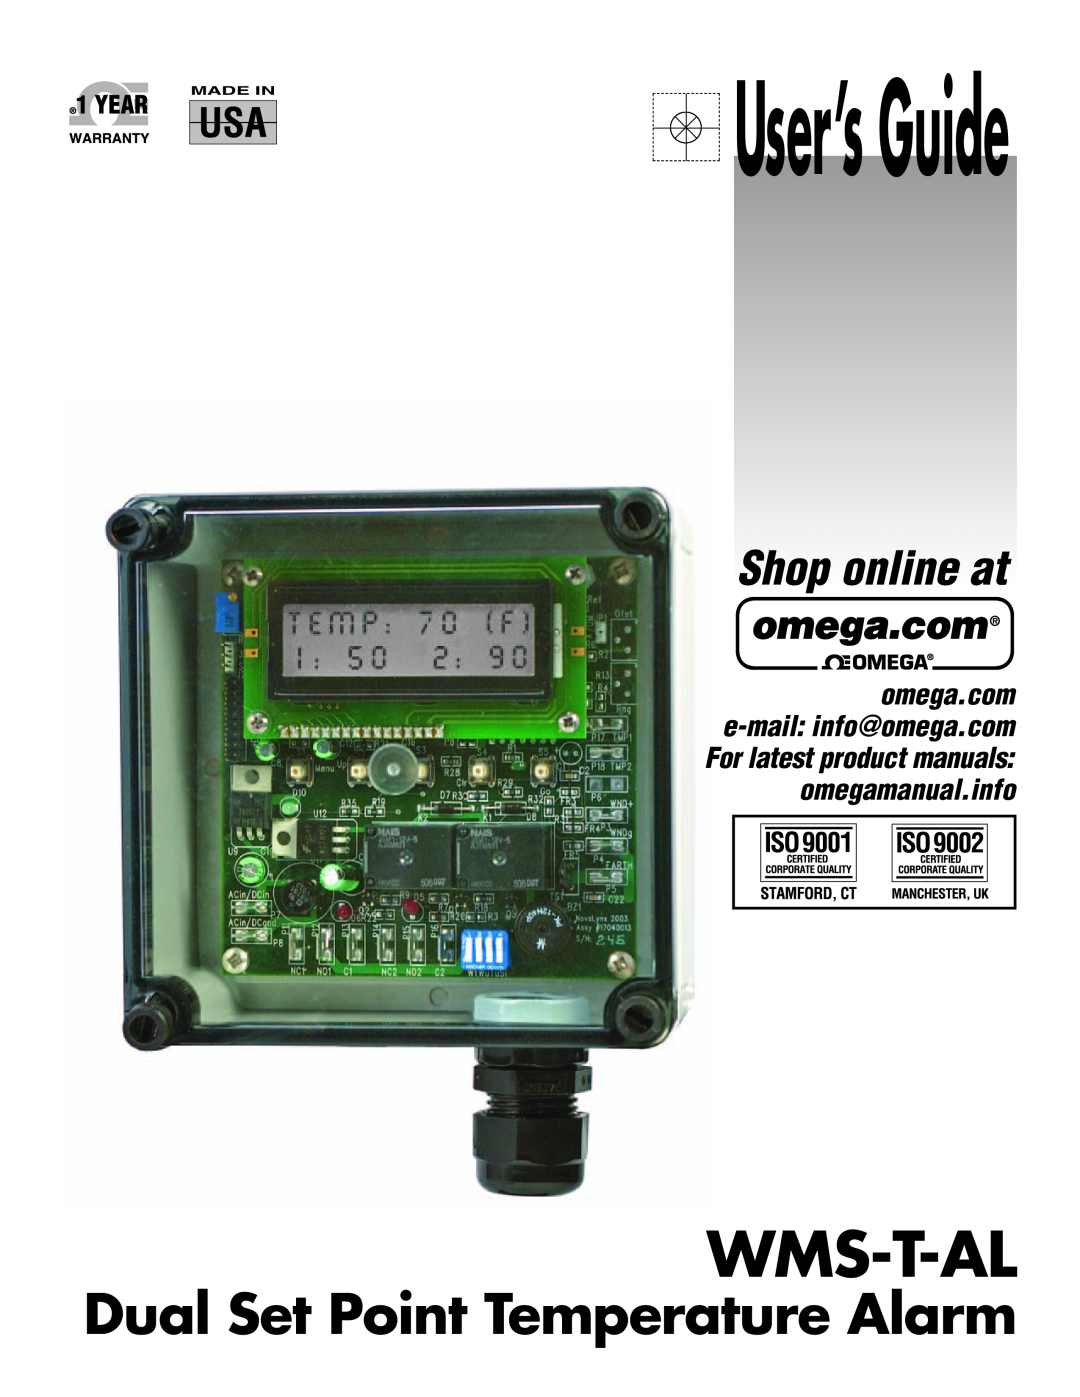 Omega WMS-T-AL manual User’s Guide, Wms-T-Al, Dual Set Point Temperature Alarm, Shop online at, Made In 